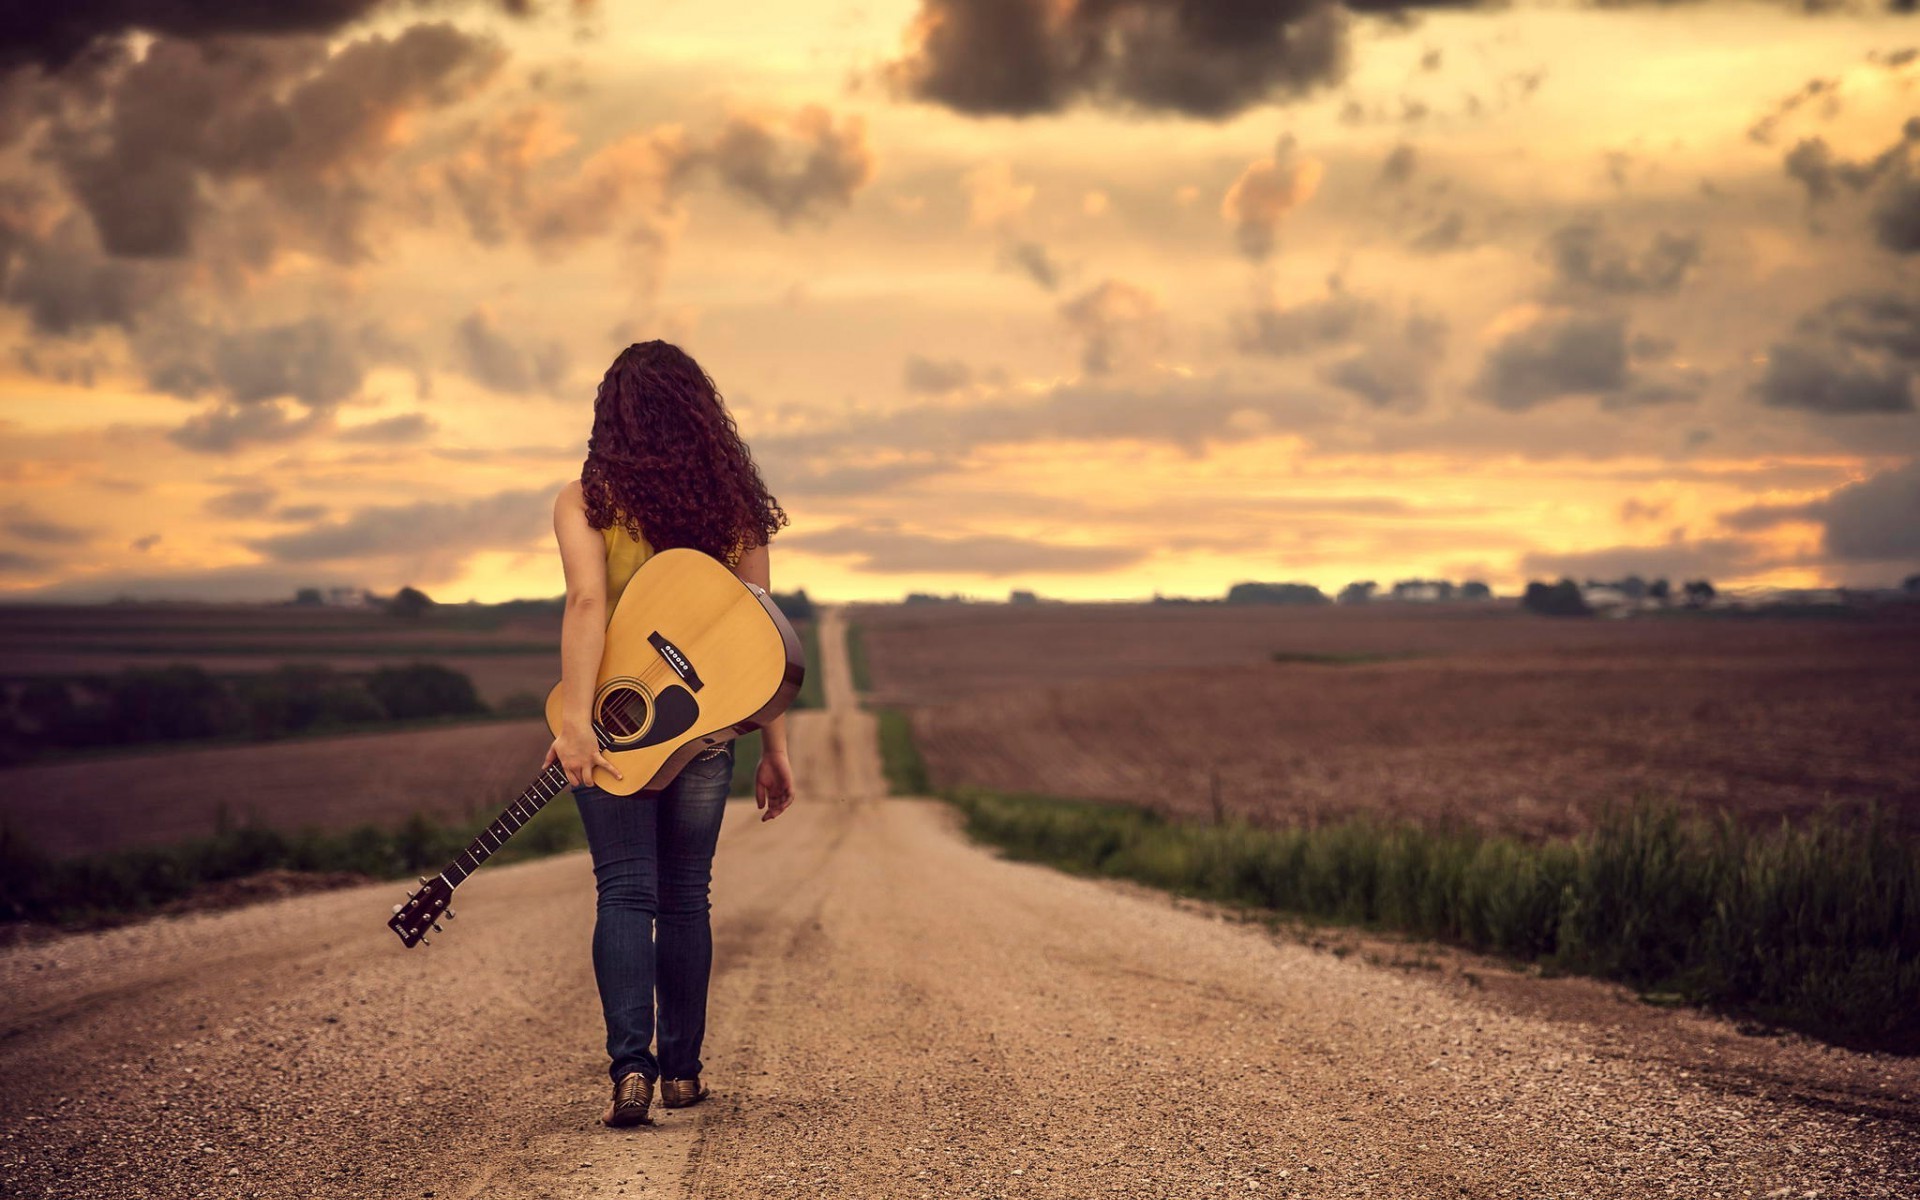 Jake Olson, Curly Hair, Women Outdoors, Guitar, Road, Musical Instrument, Clouds, Jeans, Nebraska Wallpaper